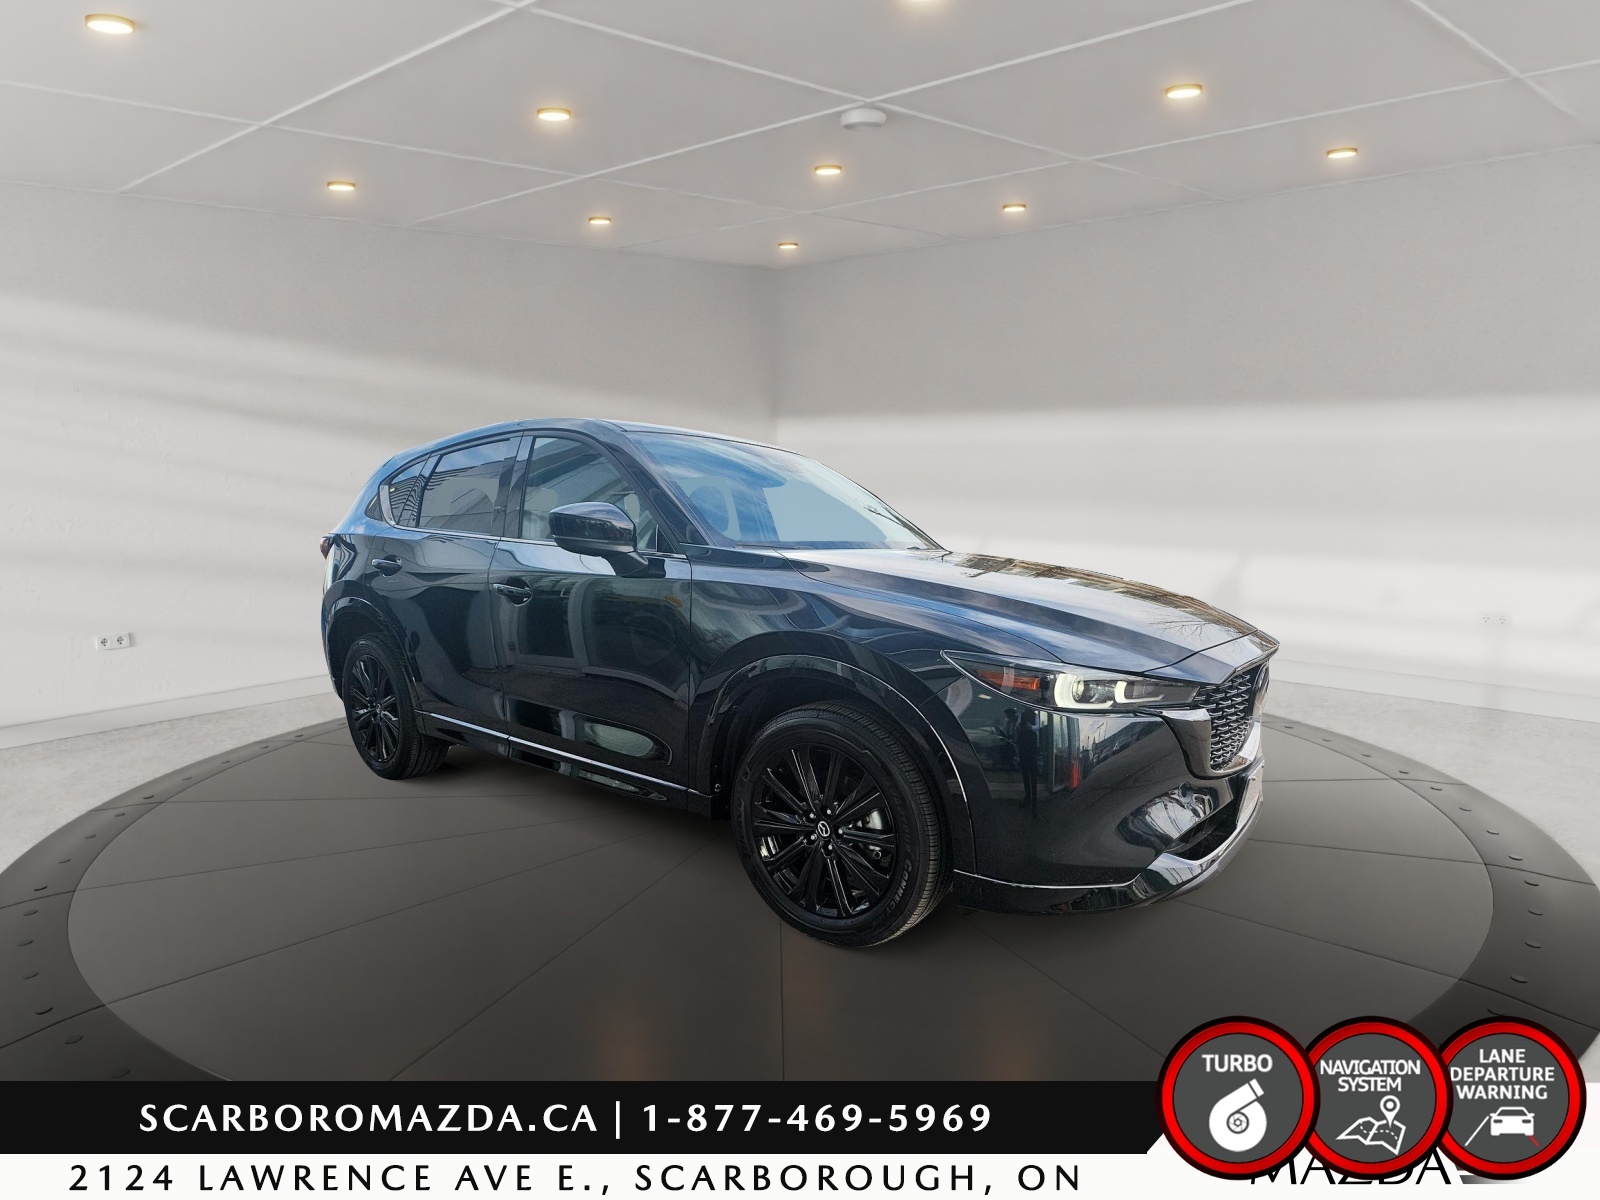 2022 Mazda MazdaCX_5 SPORT|TURBO|AWD|1OWNER CLEAN CARFAX